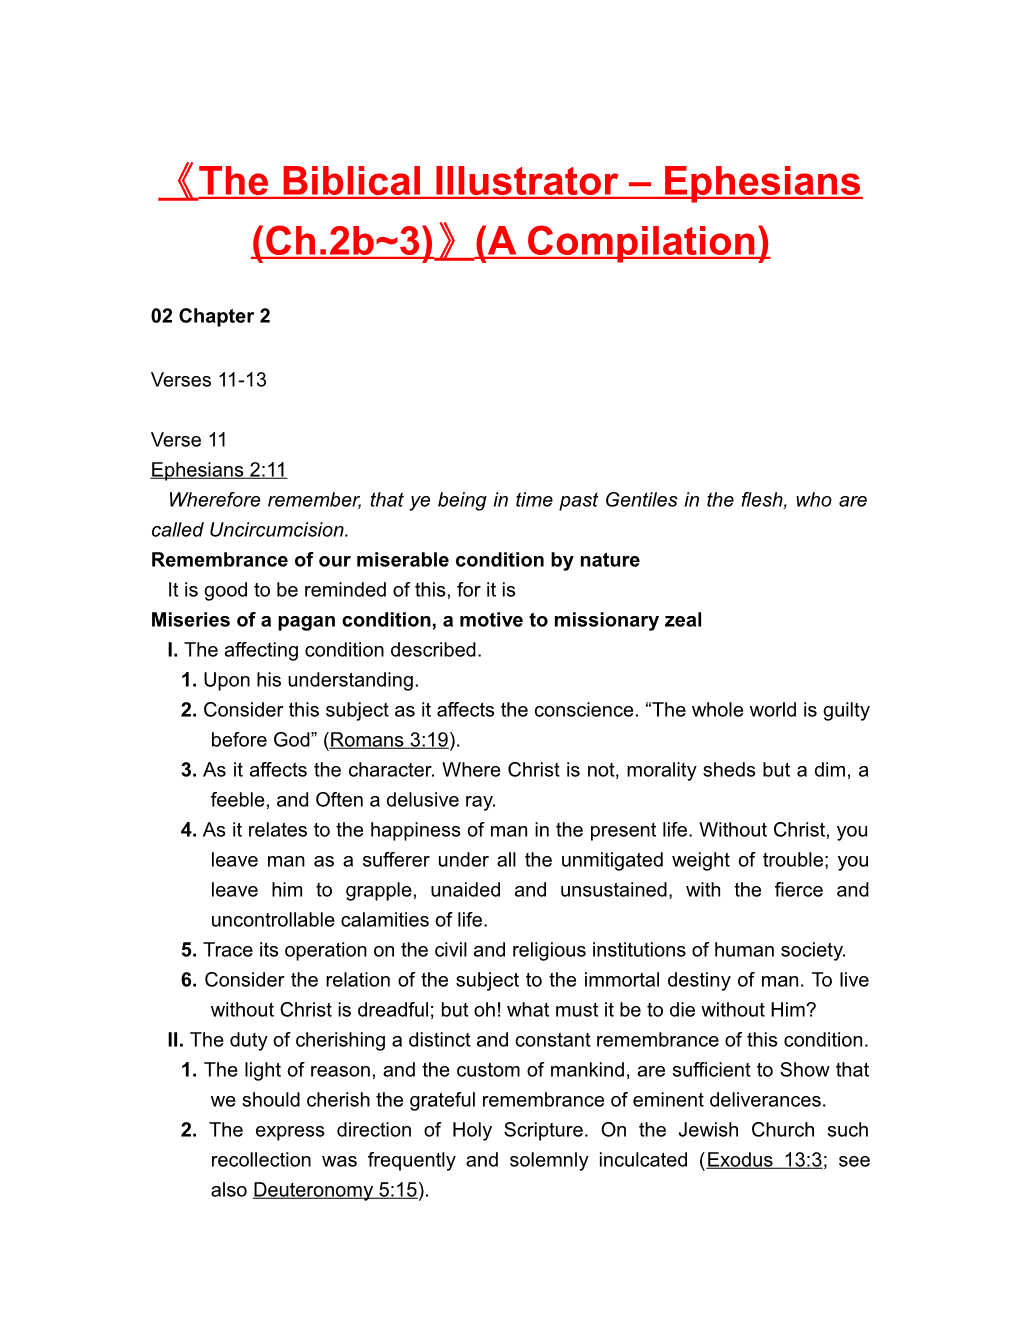 The Biblical Illustrator Ephesians (Ch.2B 3) (A Compilation)